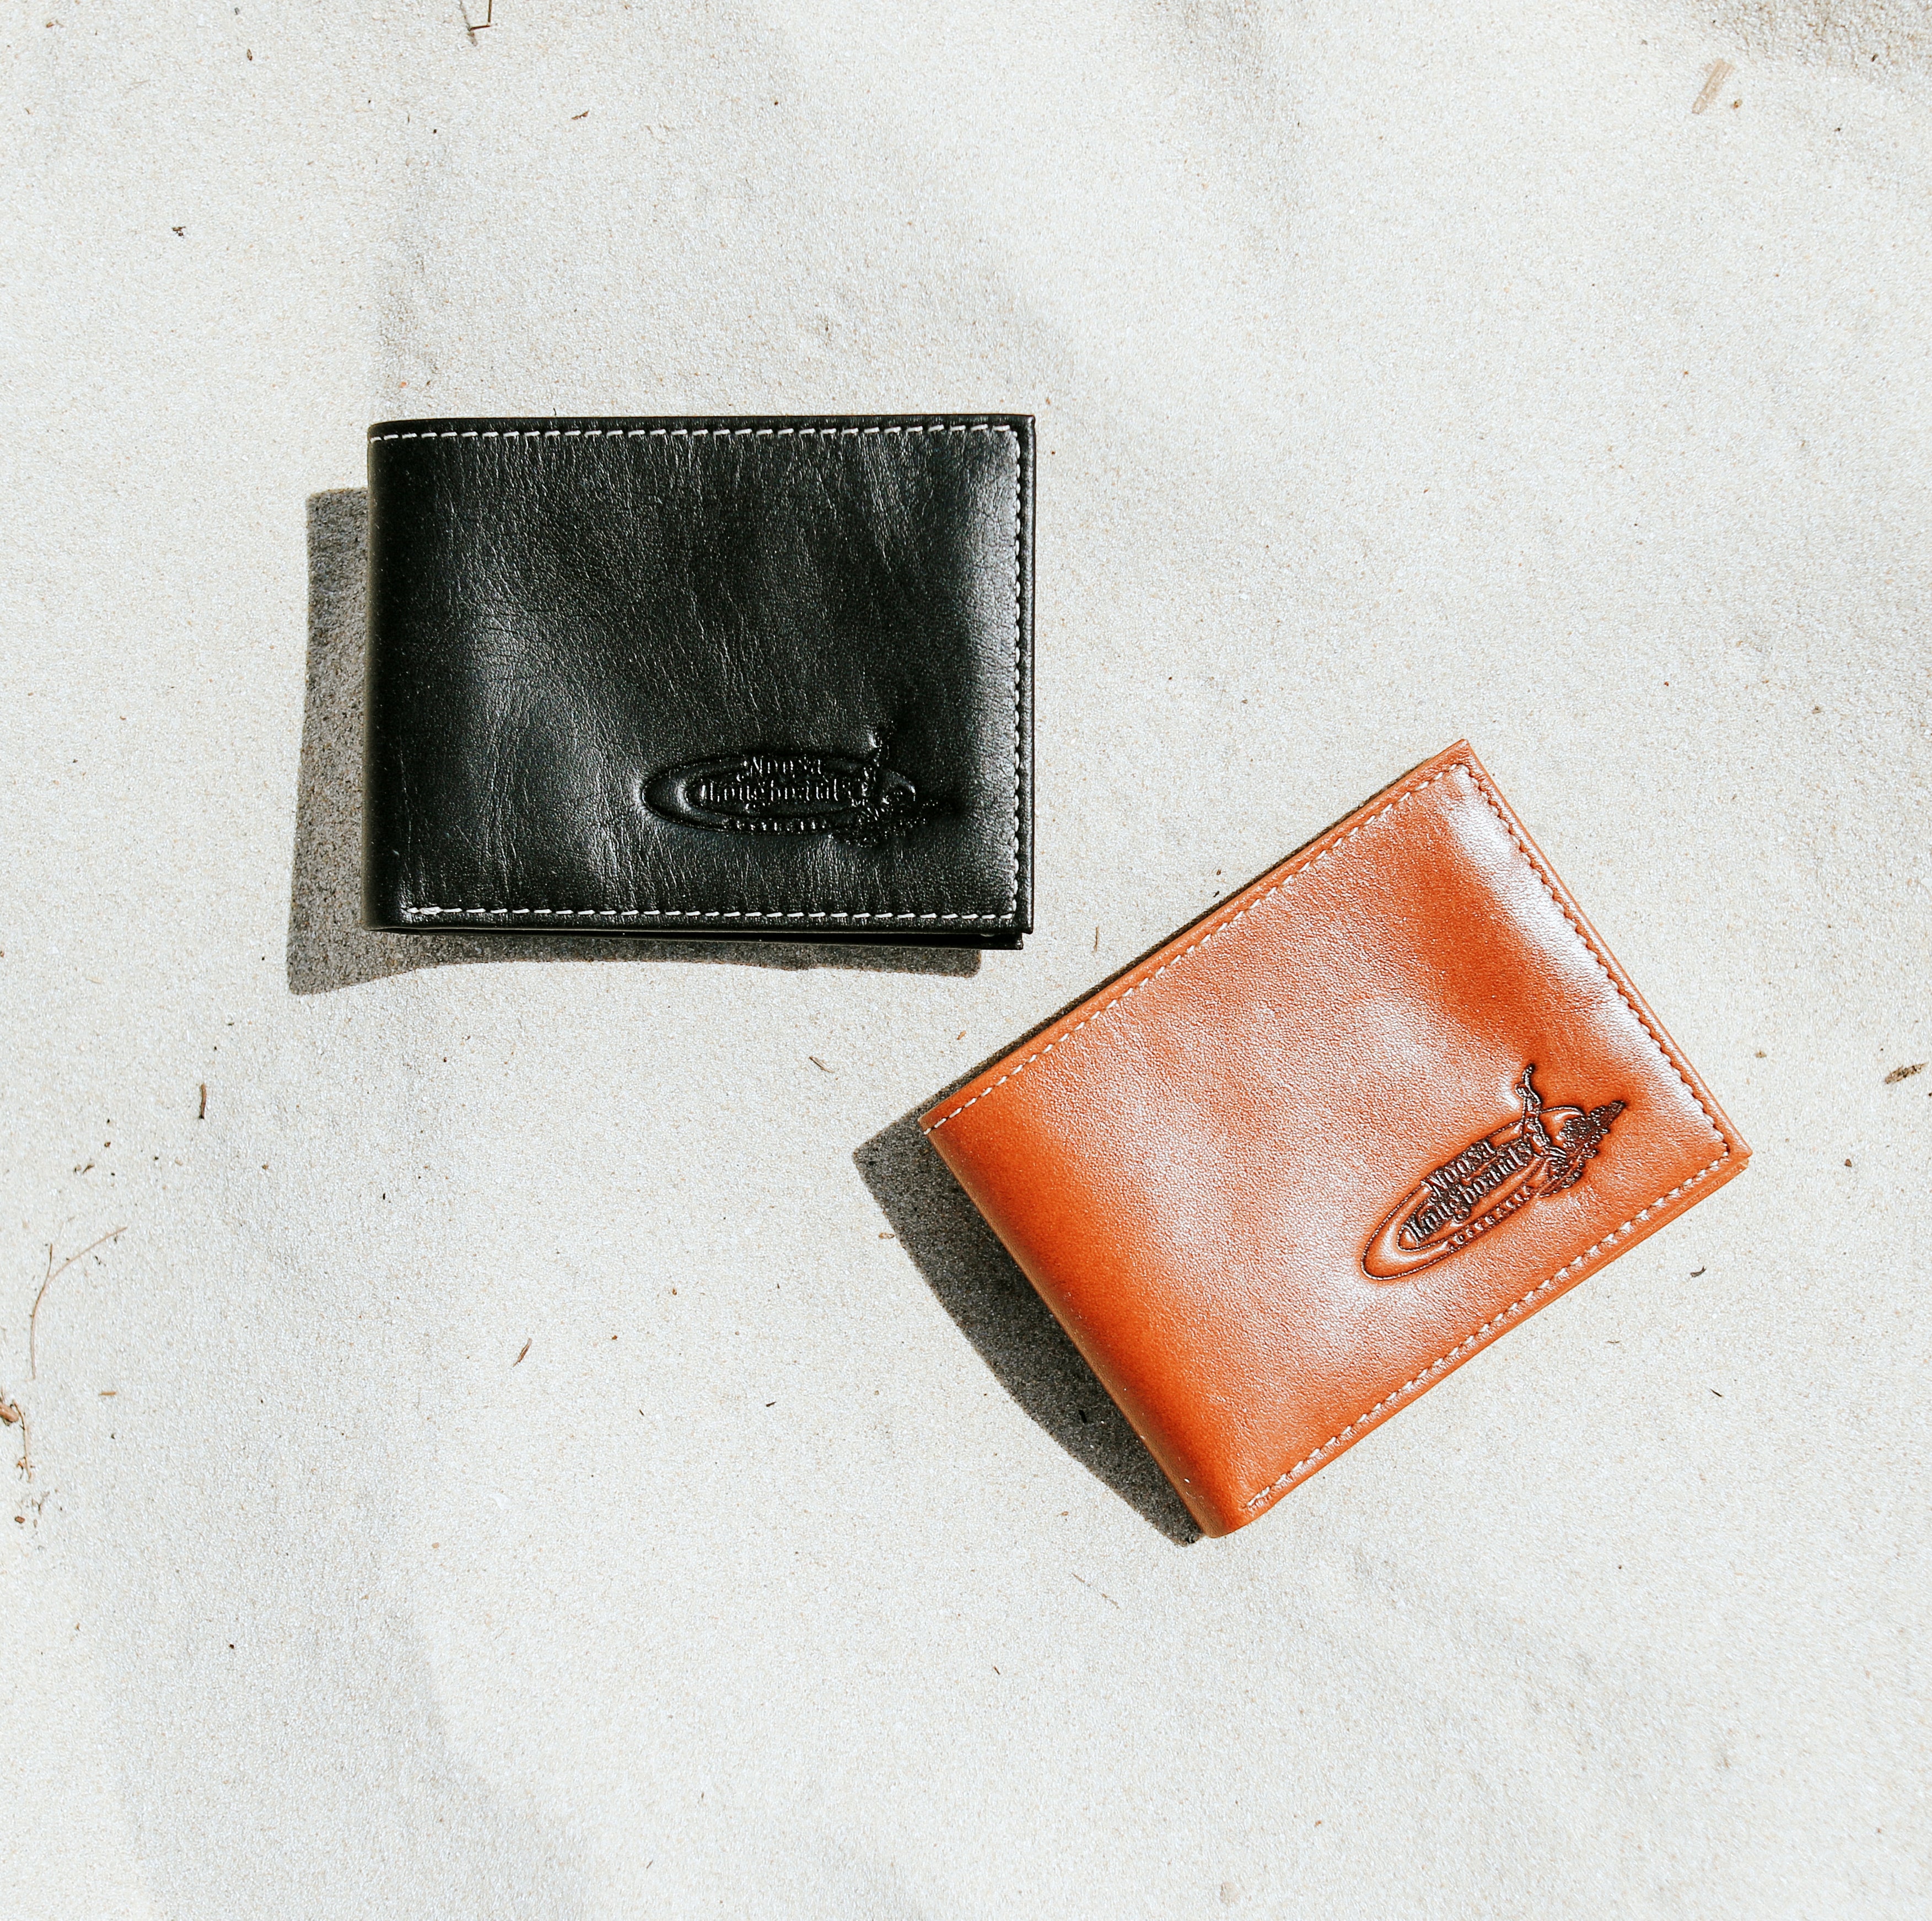 Noosa Longboards Premium Leather Wallet